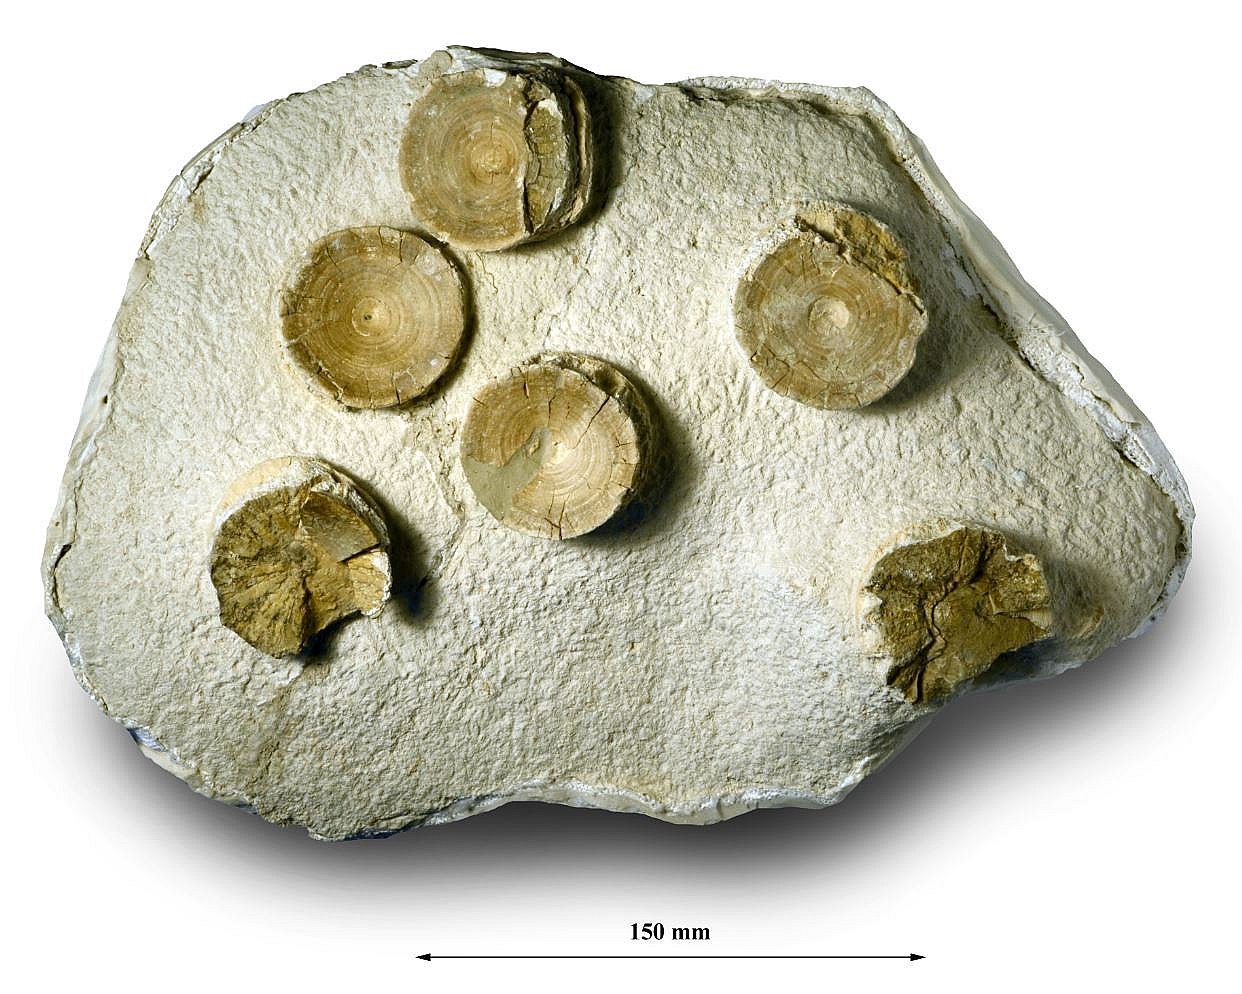 finder unikt fossilfund på Stevns Klint | TV2